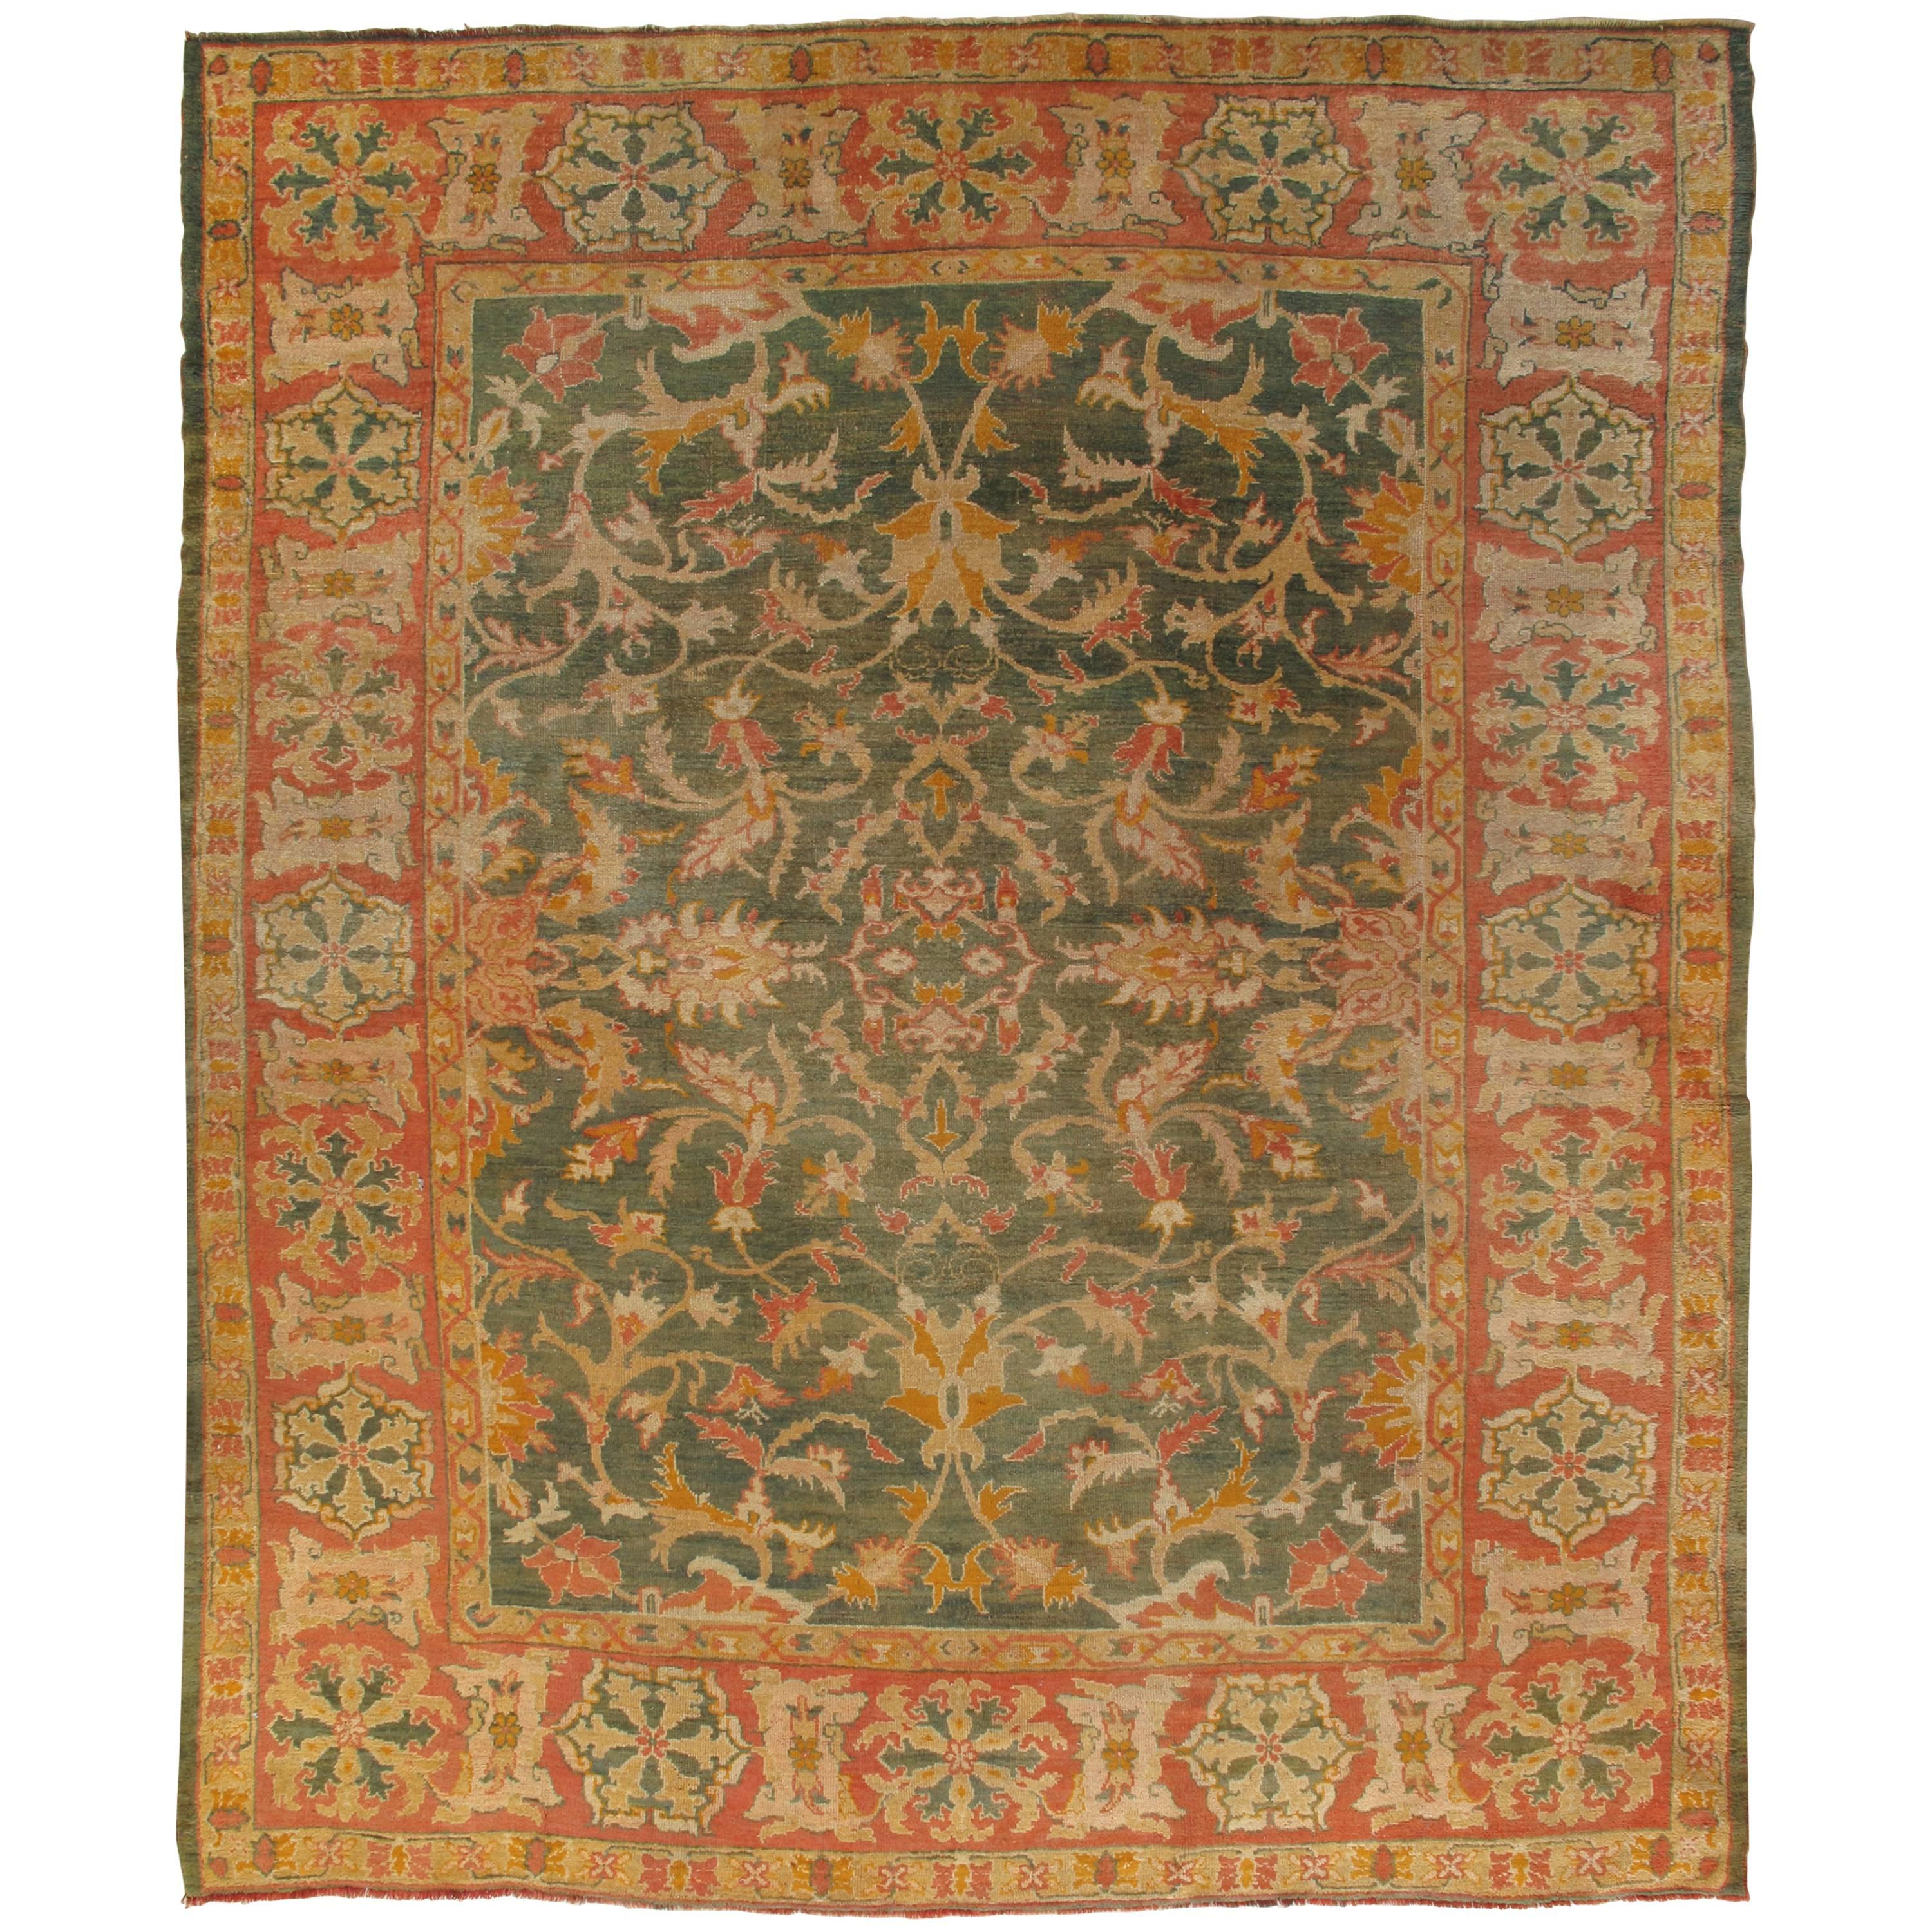 Oushak Carpet, Turkish Rugs, Handmade Oriental Rugs, Blue Green Coral Rug